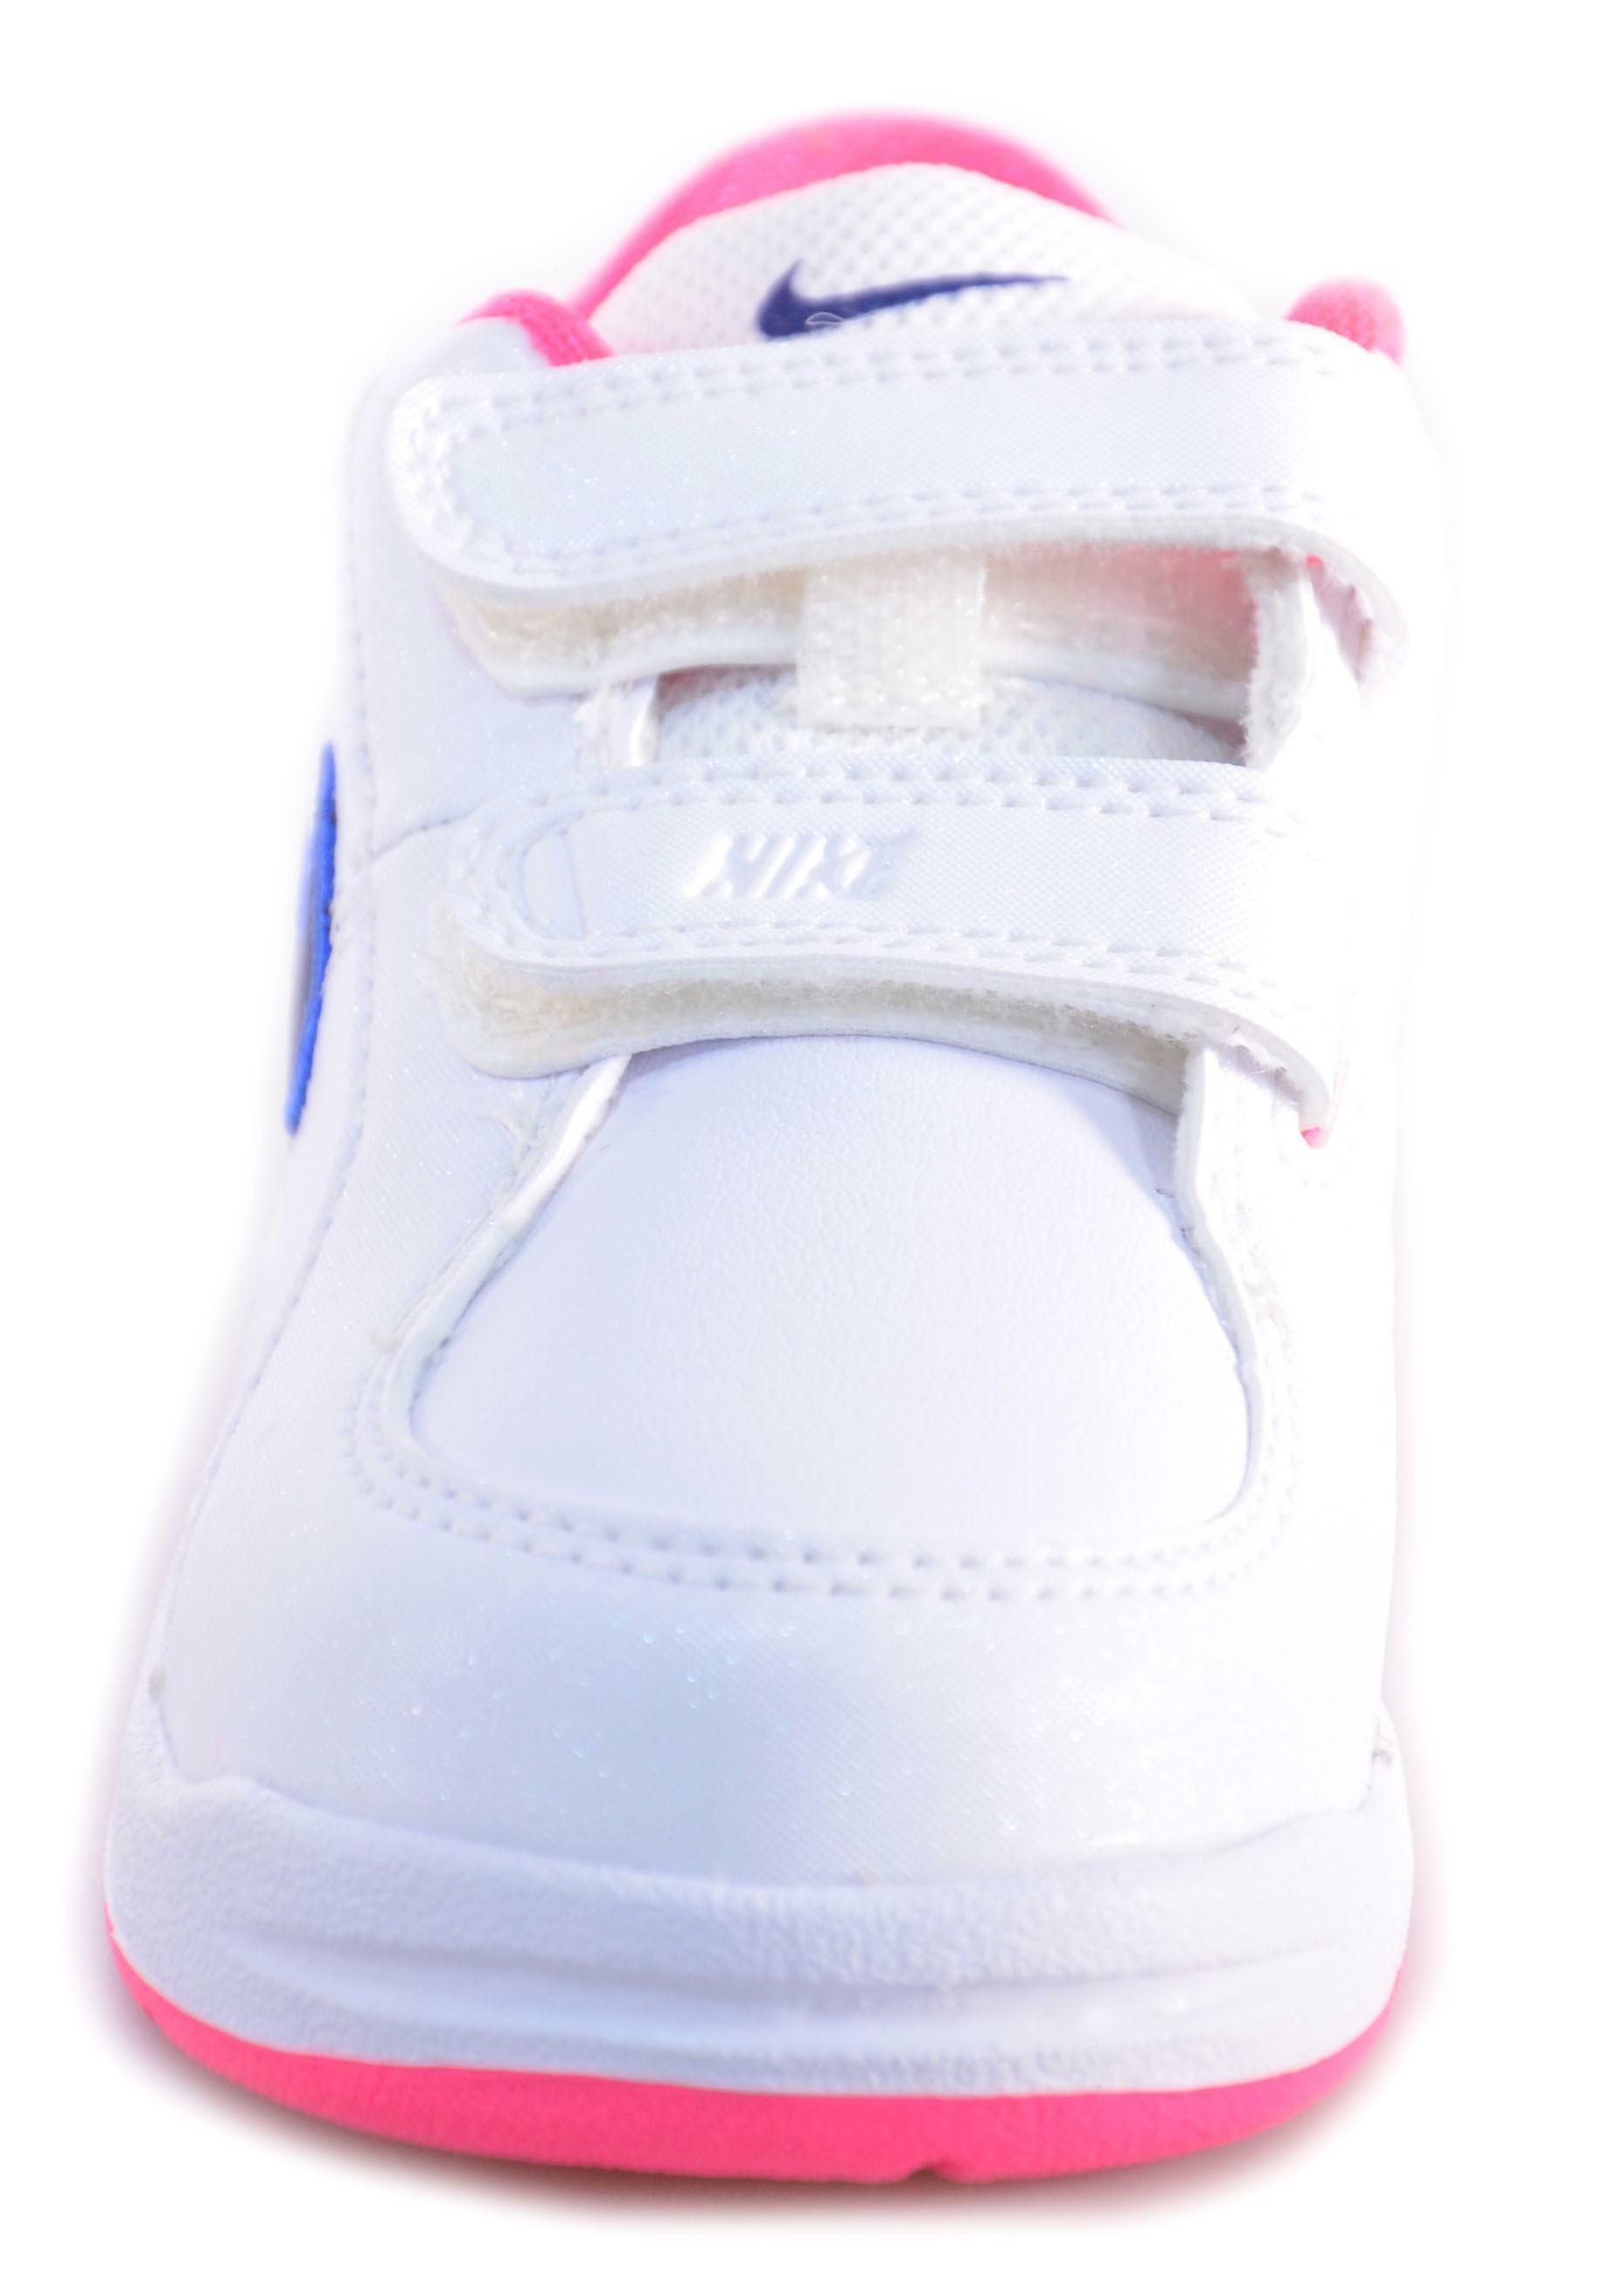 nike nike pico 4 (psv) scarpe bambina bianche blu rosa pelle velcro 454477